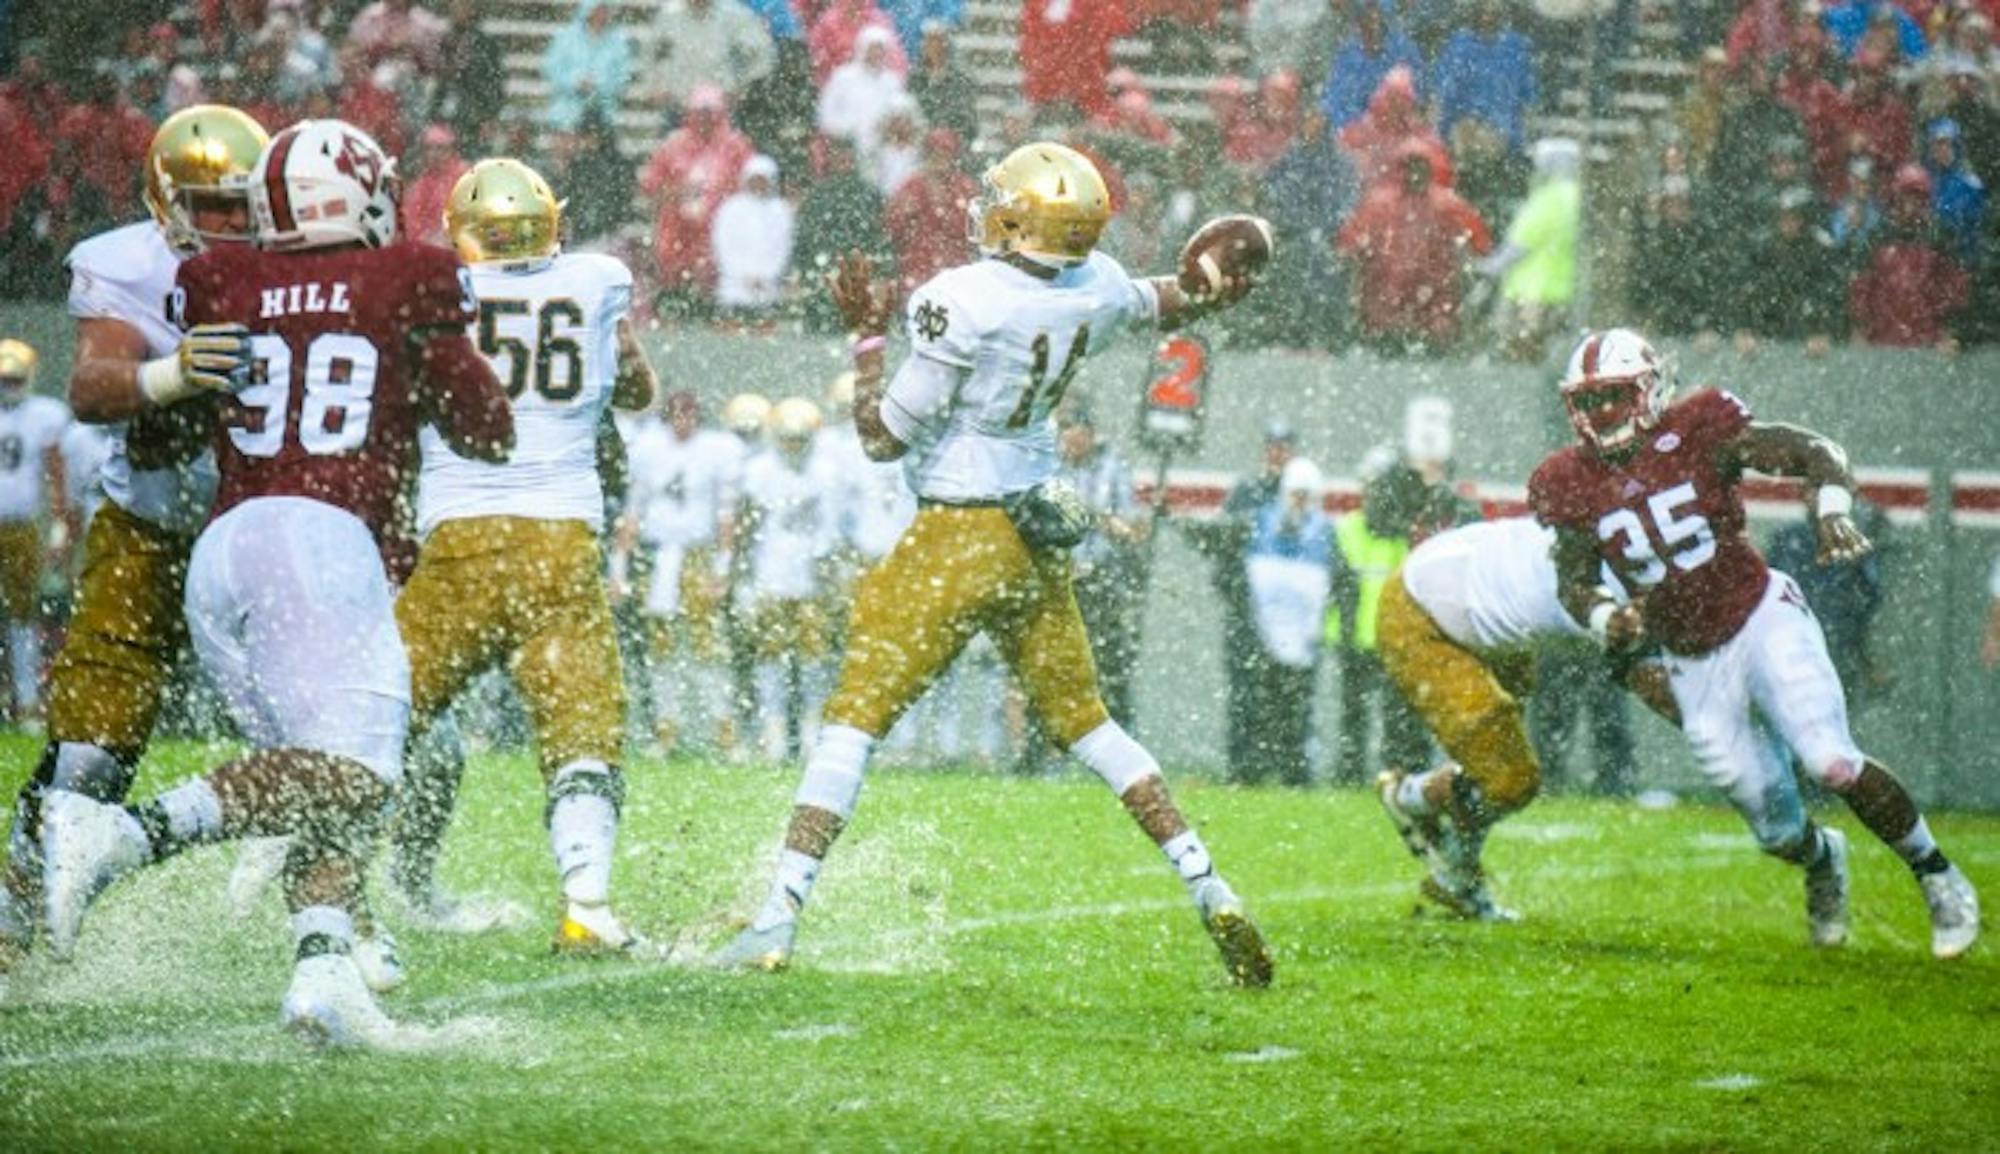 Notre Dame junior quarterback DeShone Kizer winds up to pass during Saturday's 10-3 loss to North Carolina State.